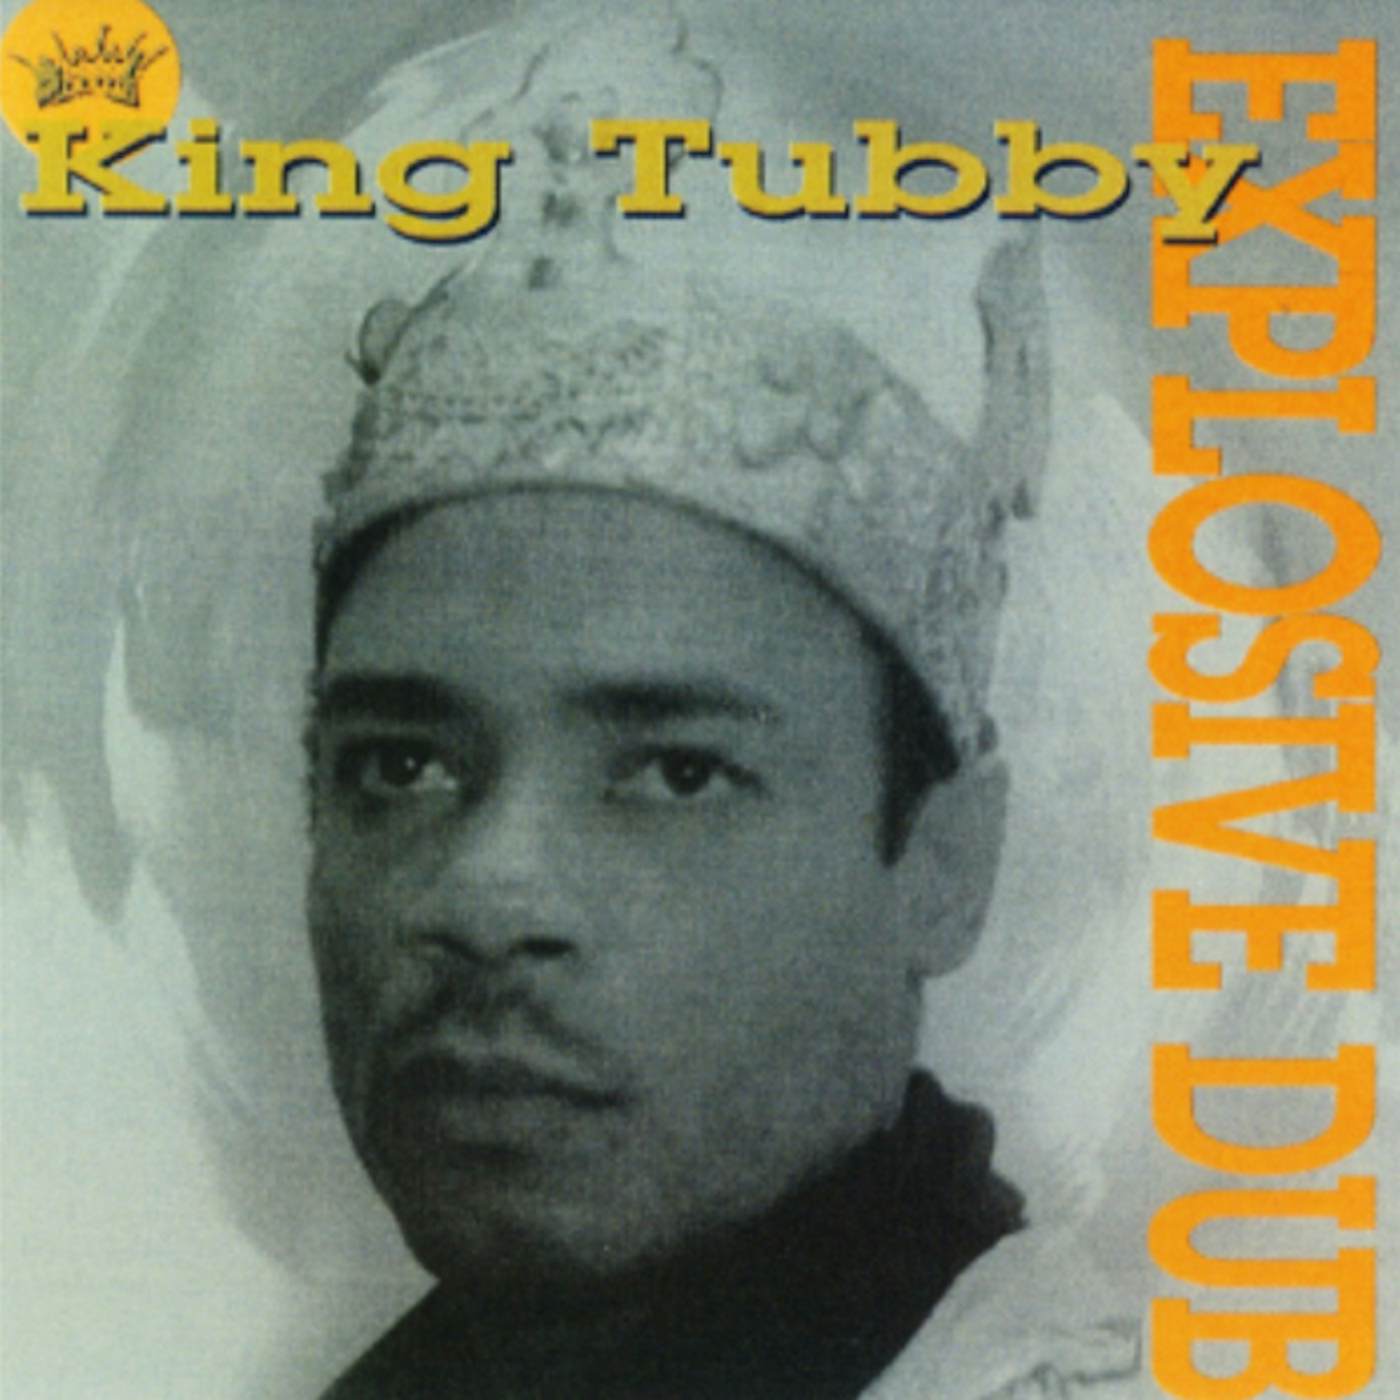 King Tubby EXPLOSIVE DUB CD